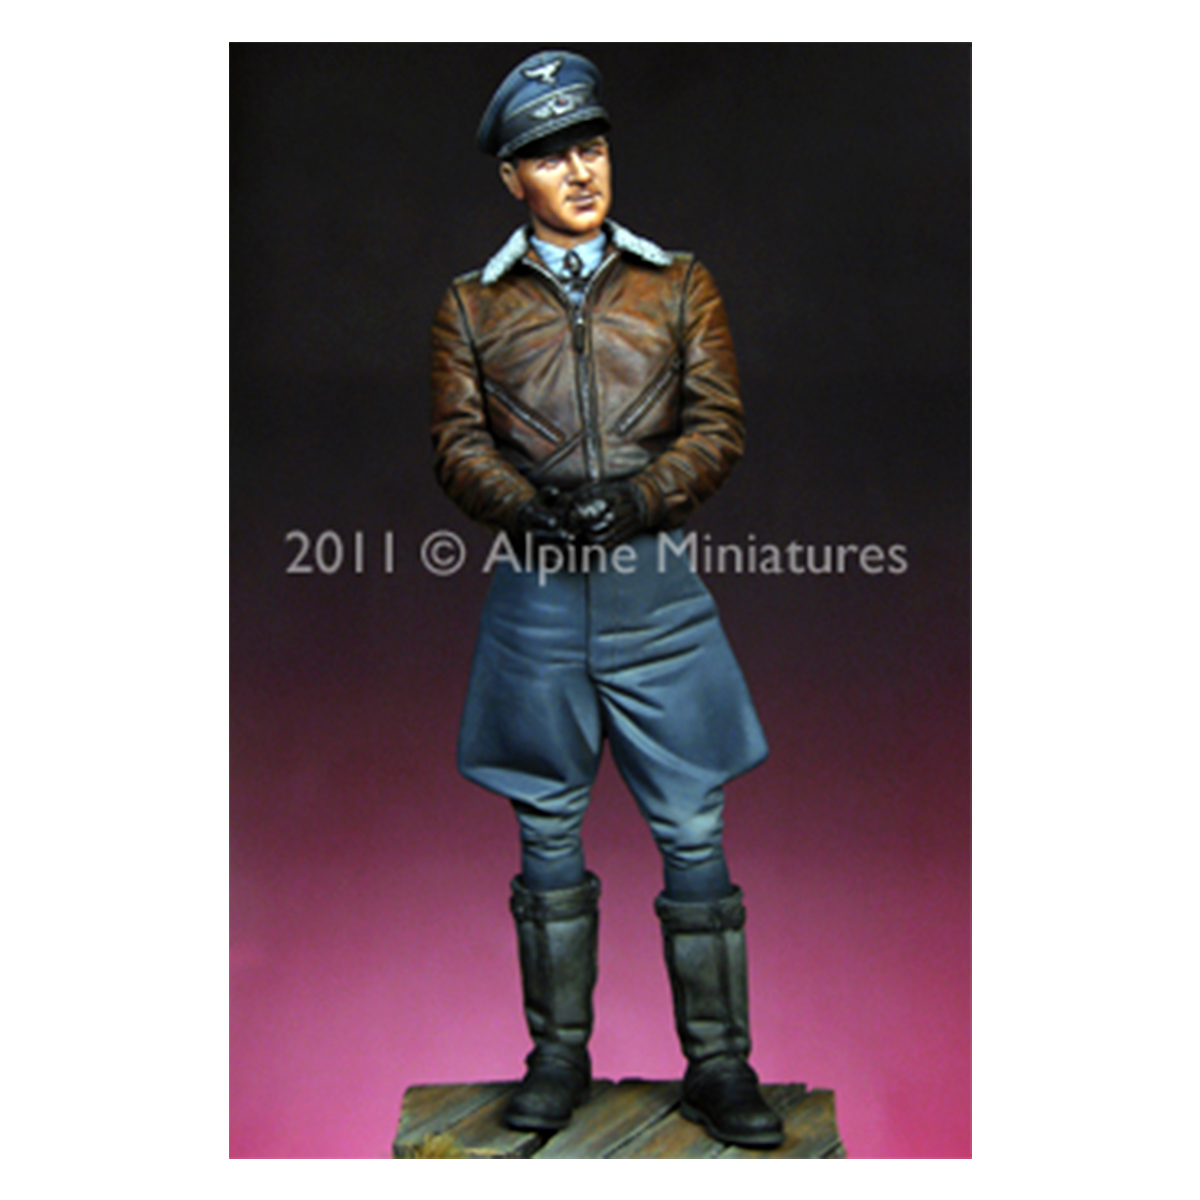 Alpine Miniatures – Luftwaffe Ace Werner Molders (1/16)